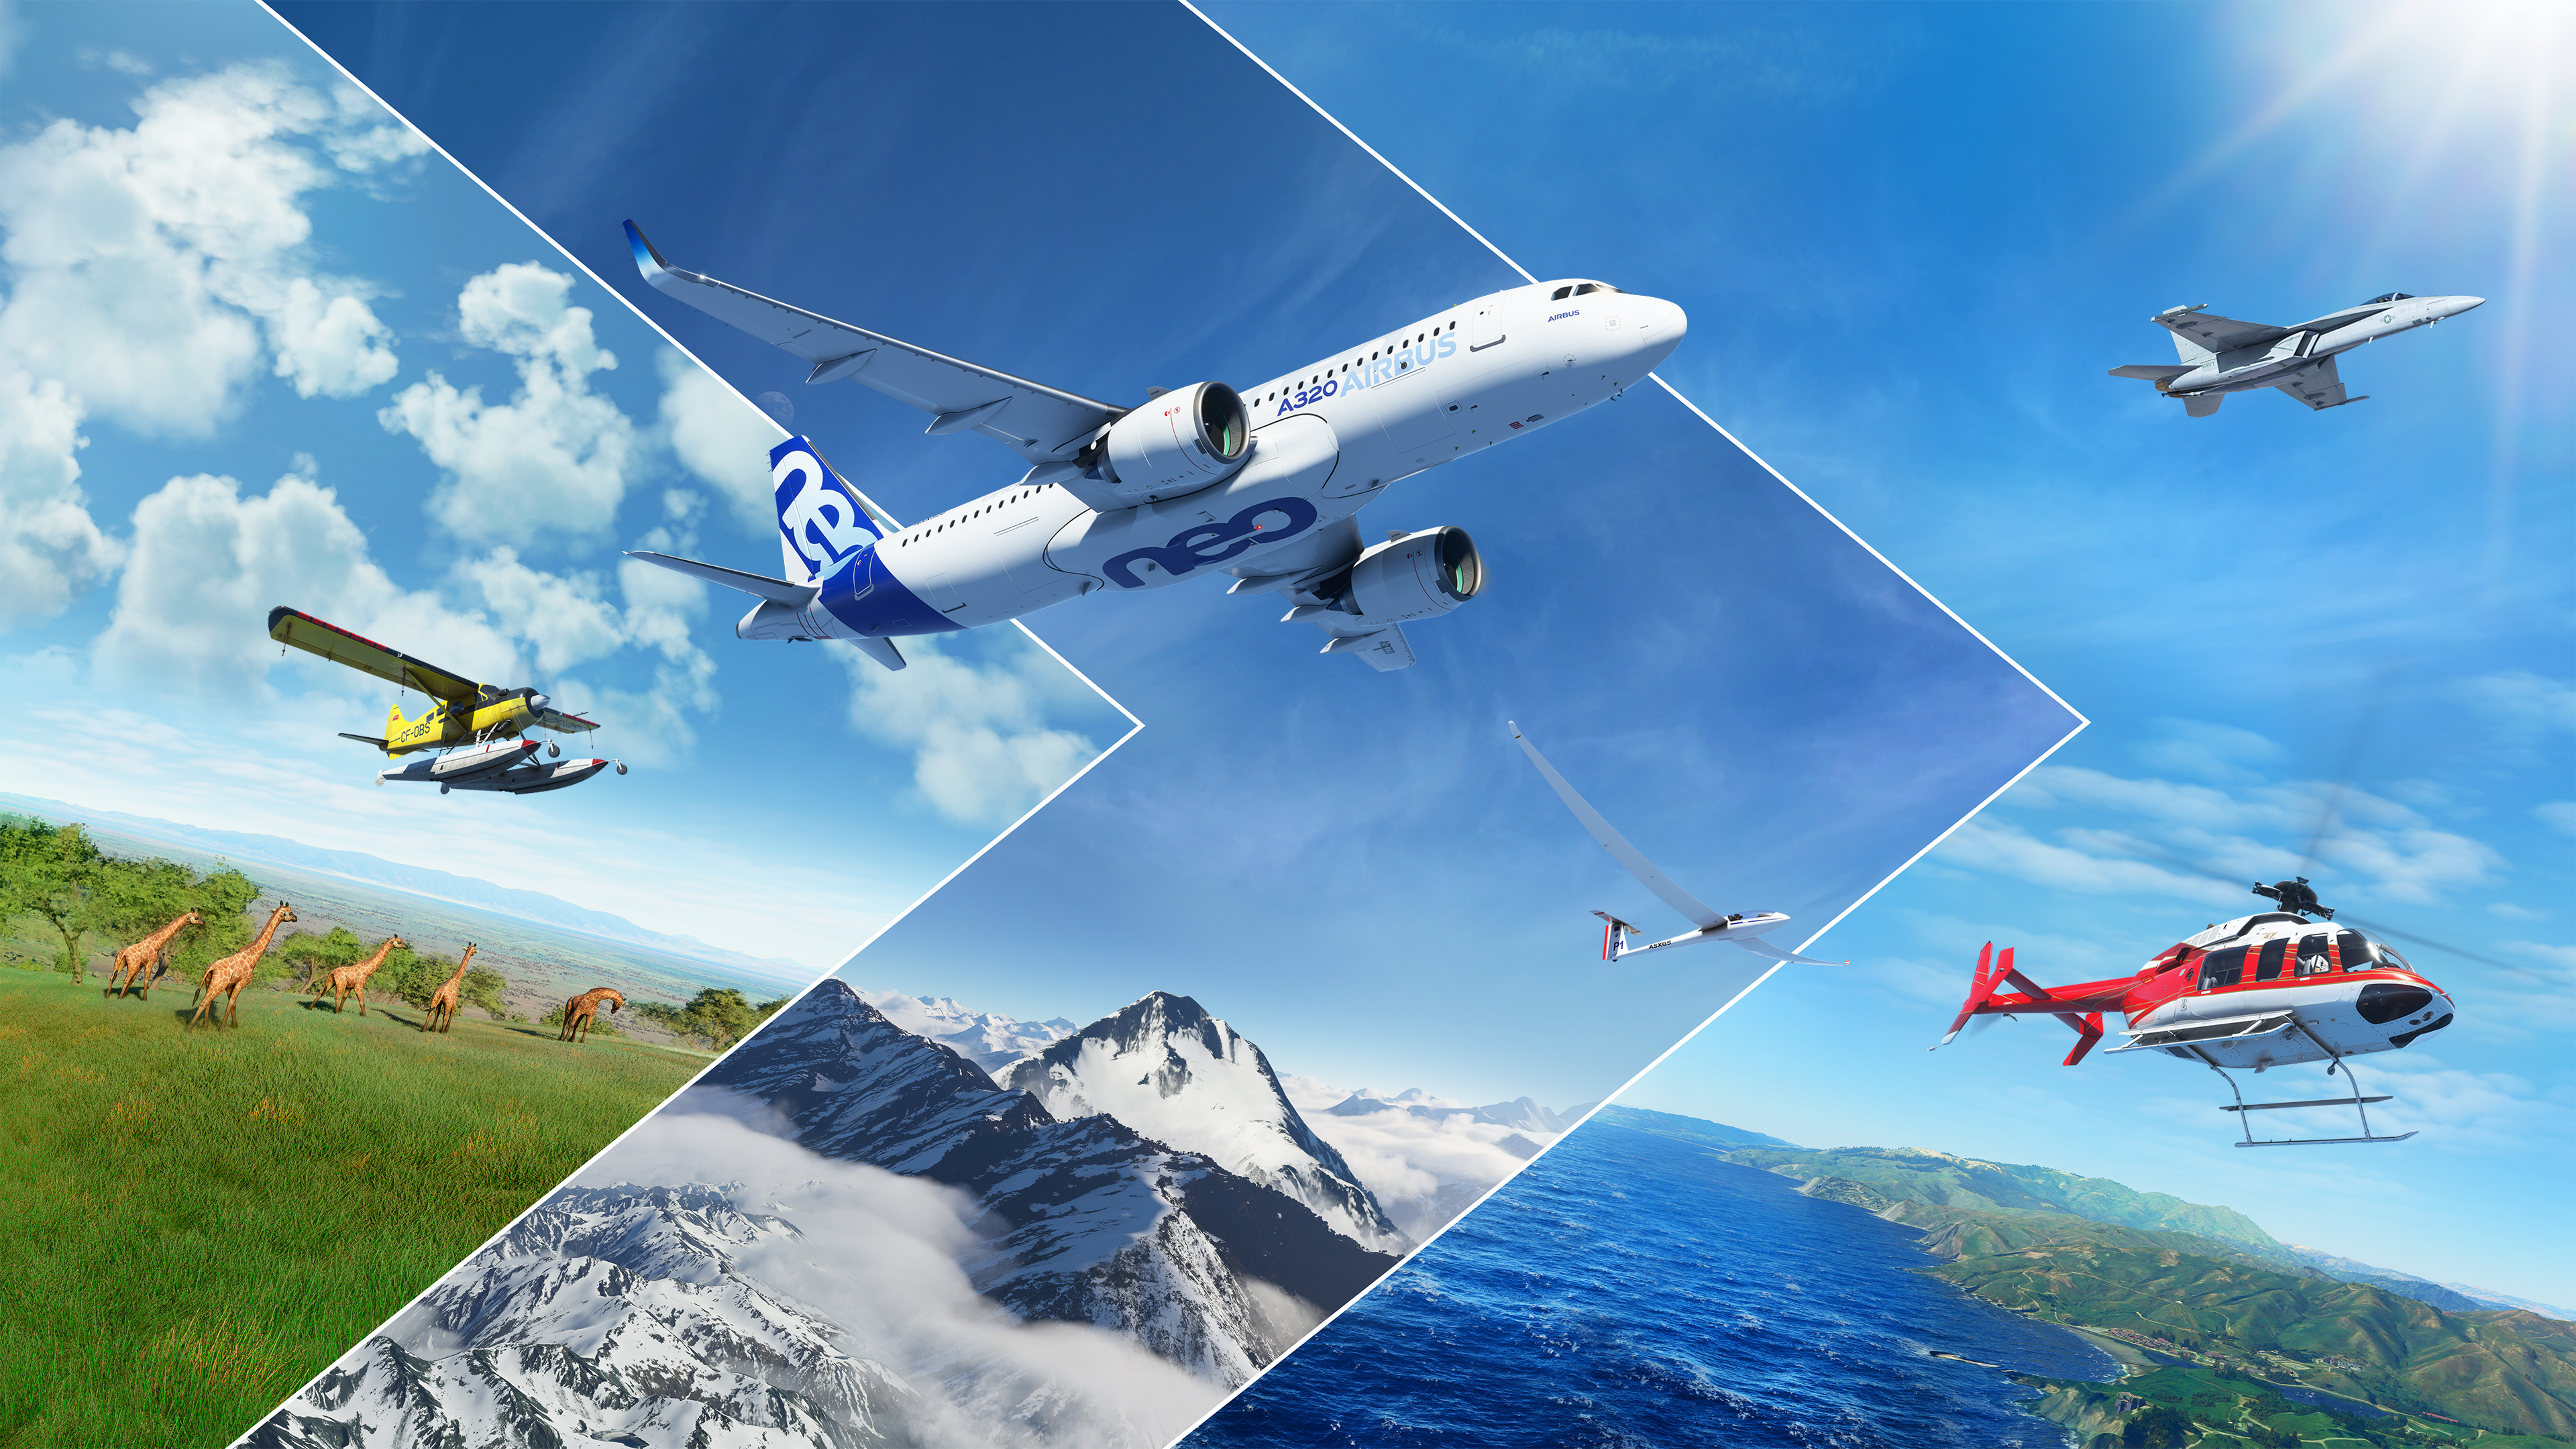 Microsoft Flight Simulator cover image